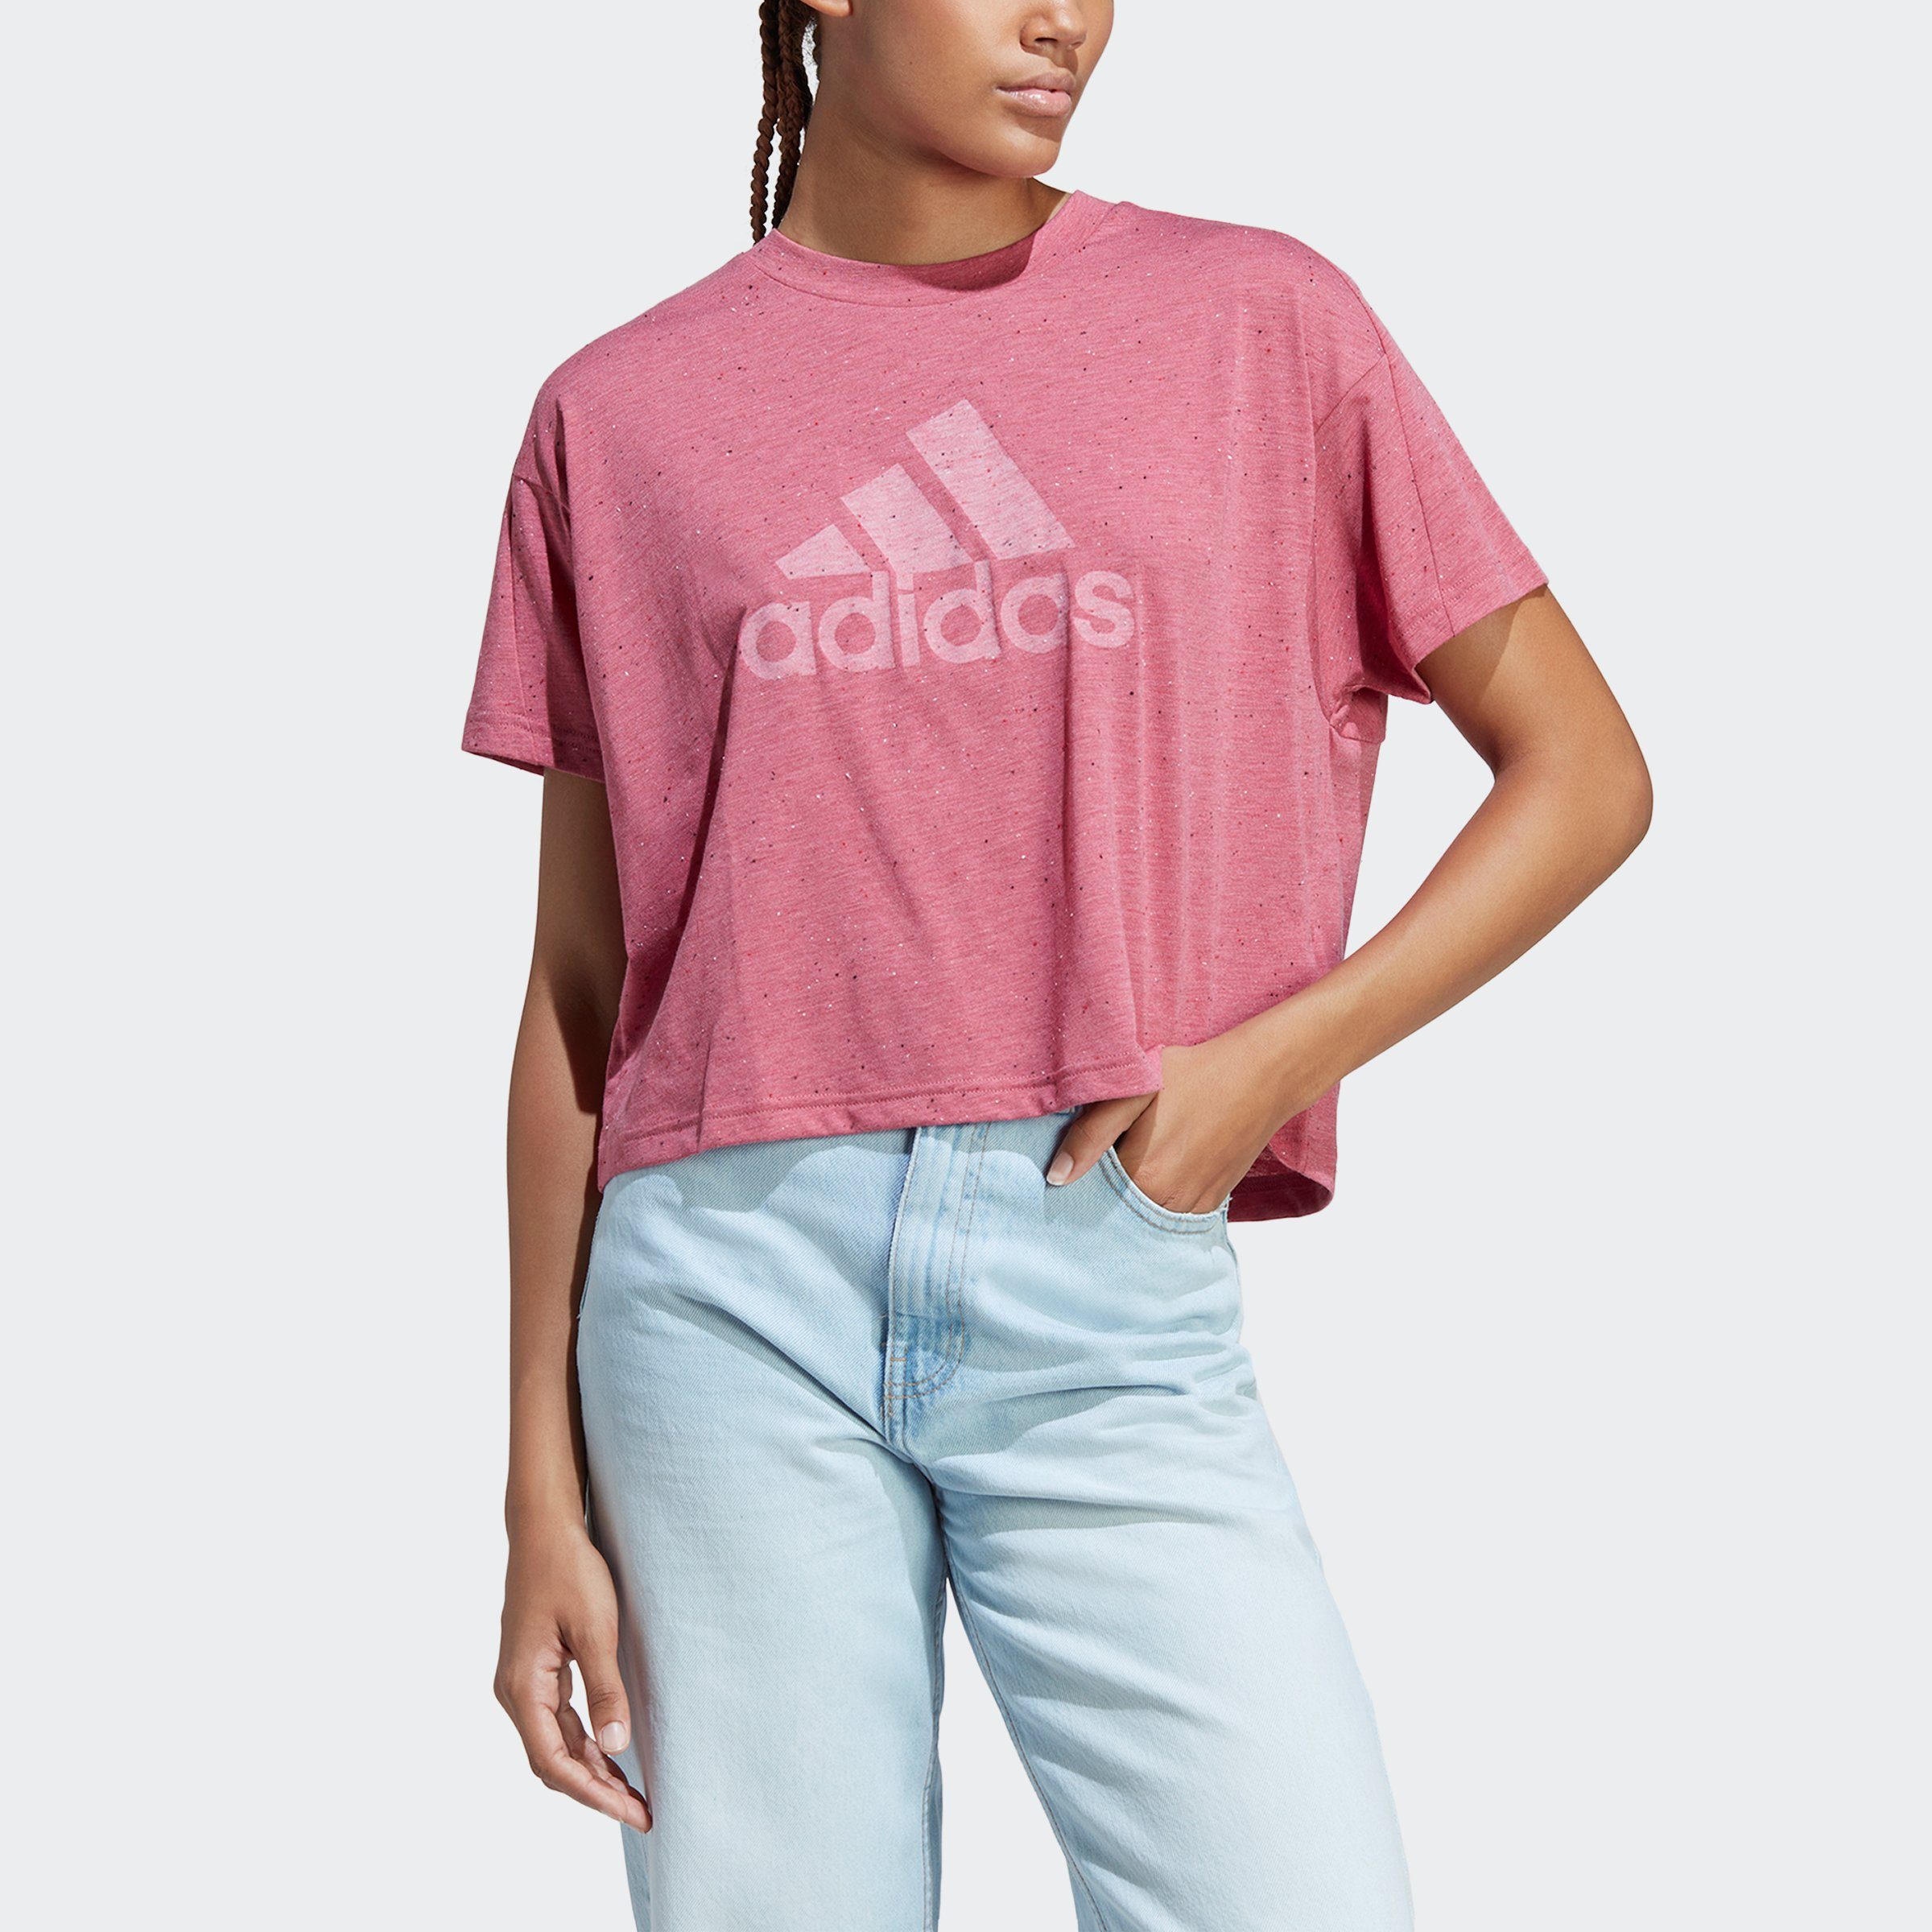 WINNERS FUTURE Pink White ICONS adidas T-Shirt Sportswear Strata / Mel.